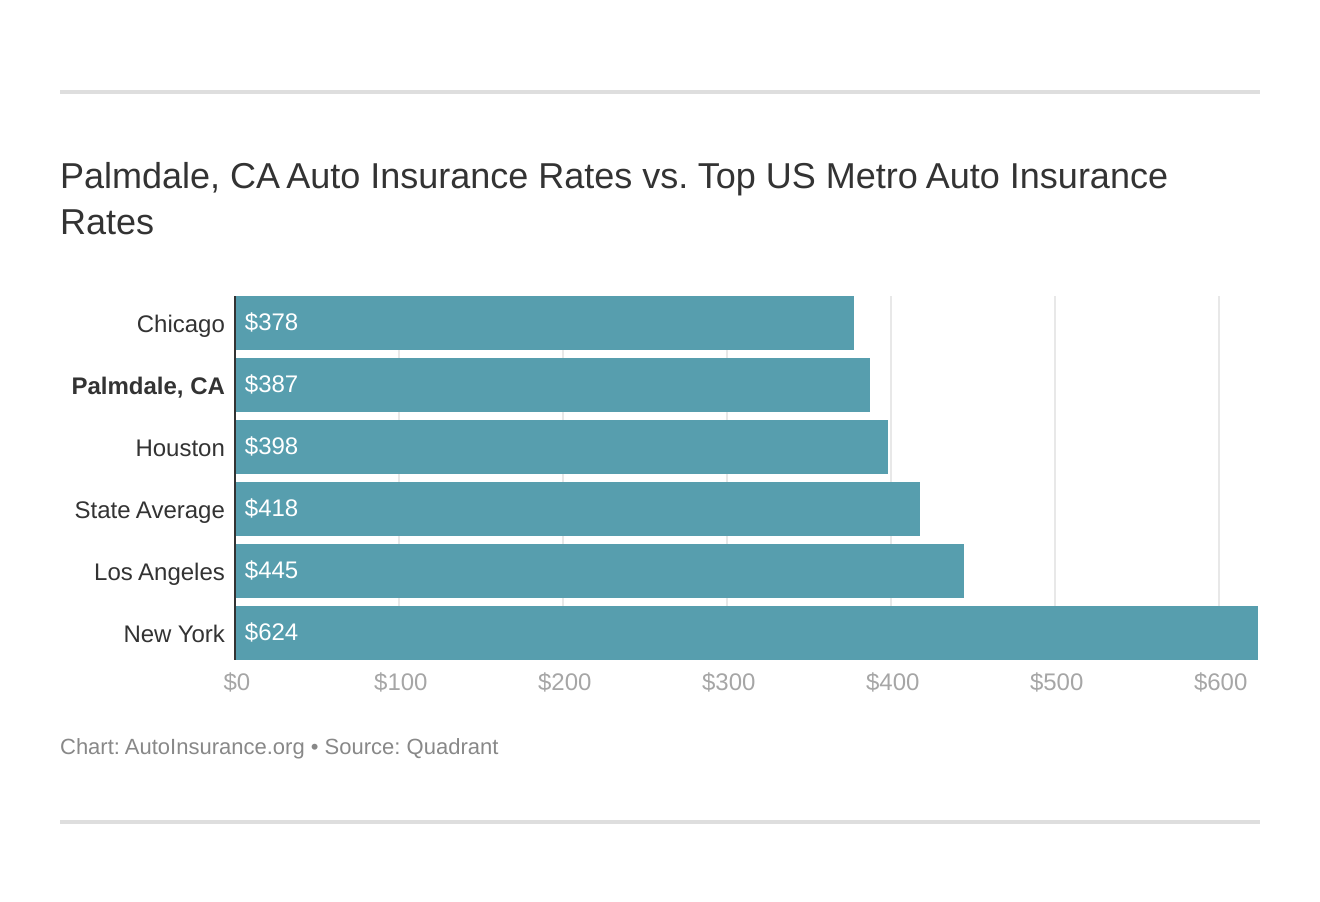 Palmdale, CA Auto Insurance Rates vs. Top US Metro Auto Insurance Rates